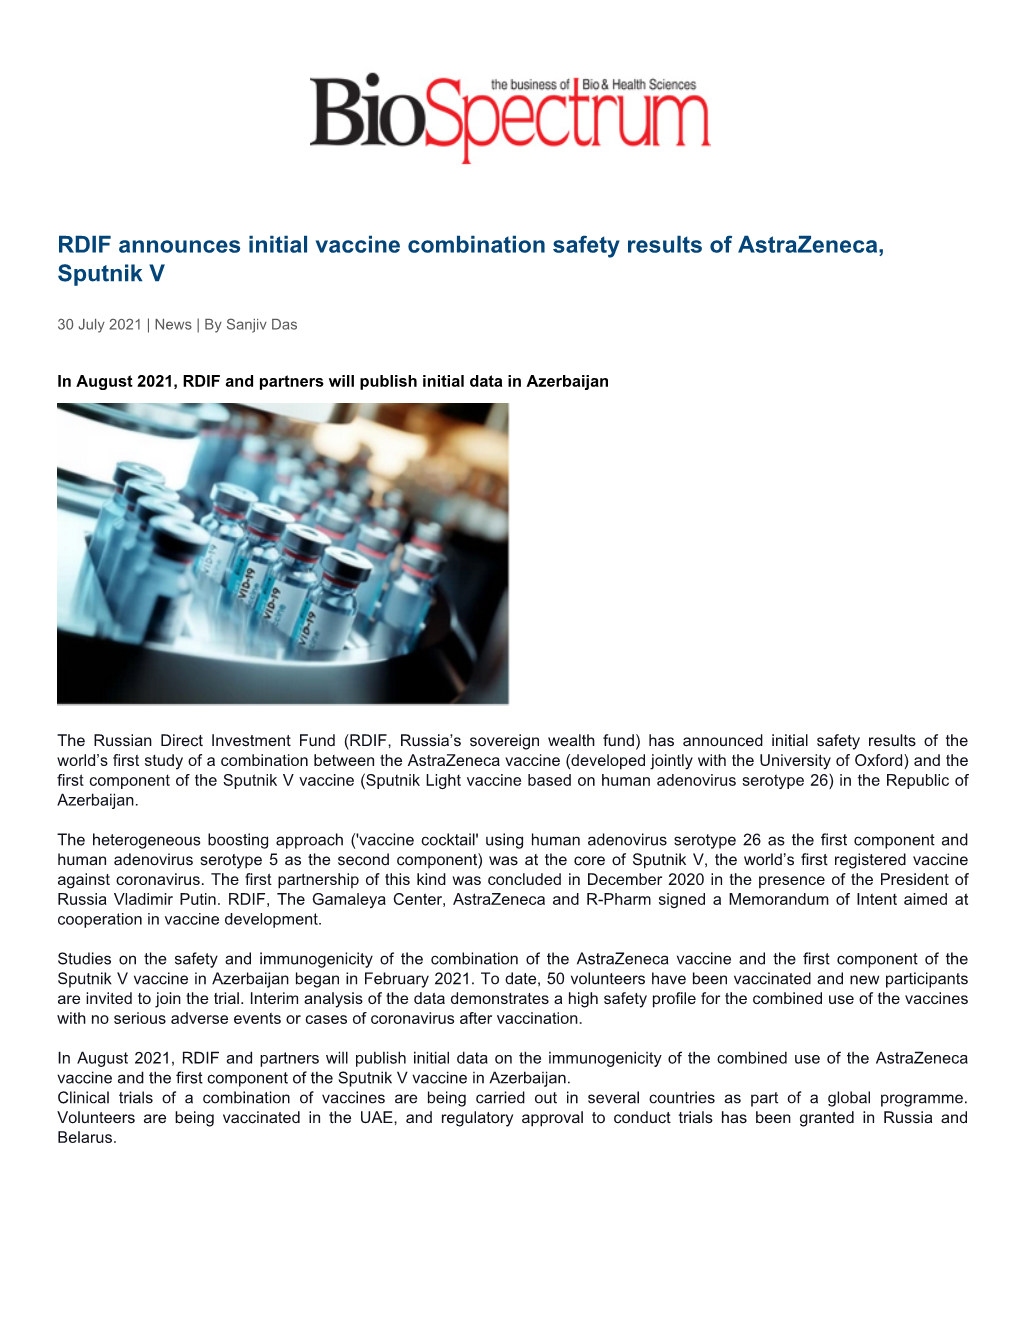 RDIF Announces Initial Vaccine Combination Safety Results of Astrazeneca, Sputnik V